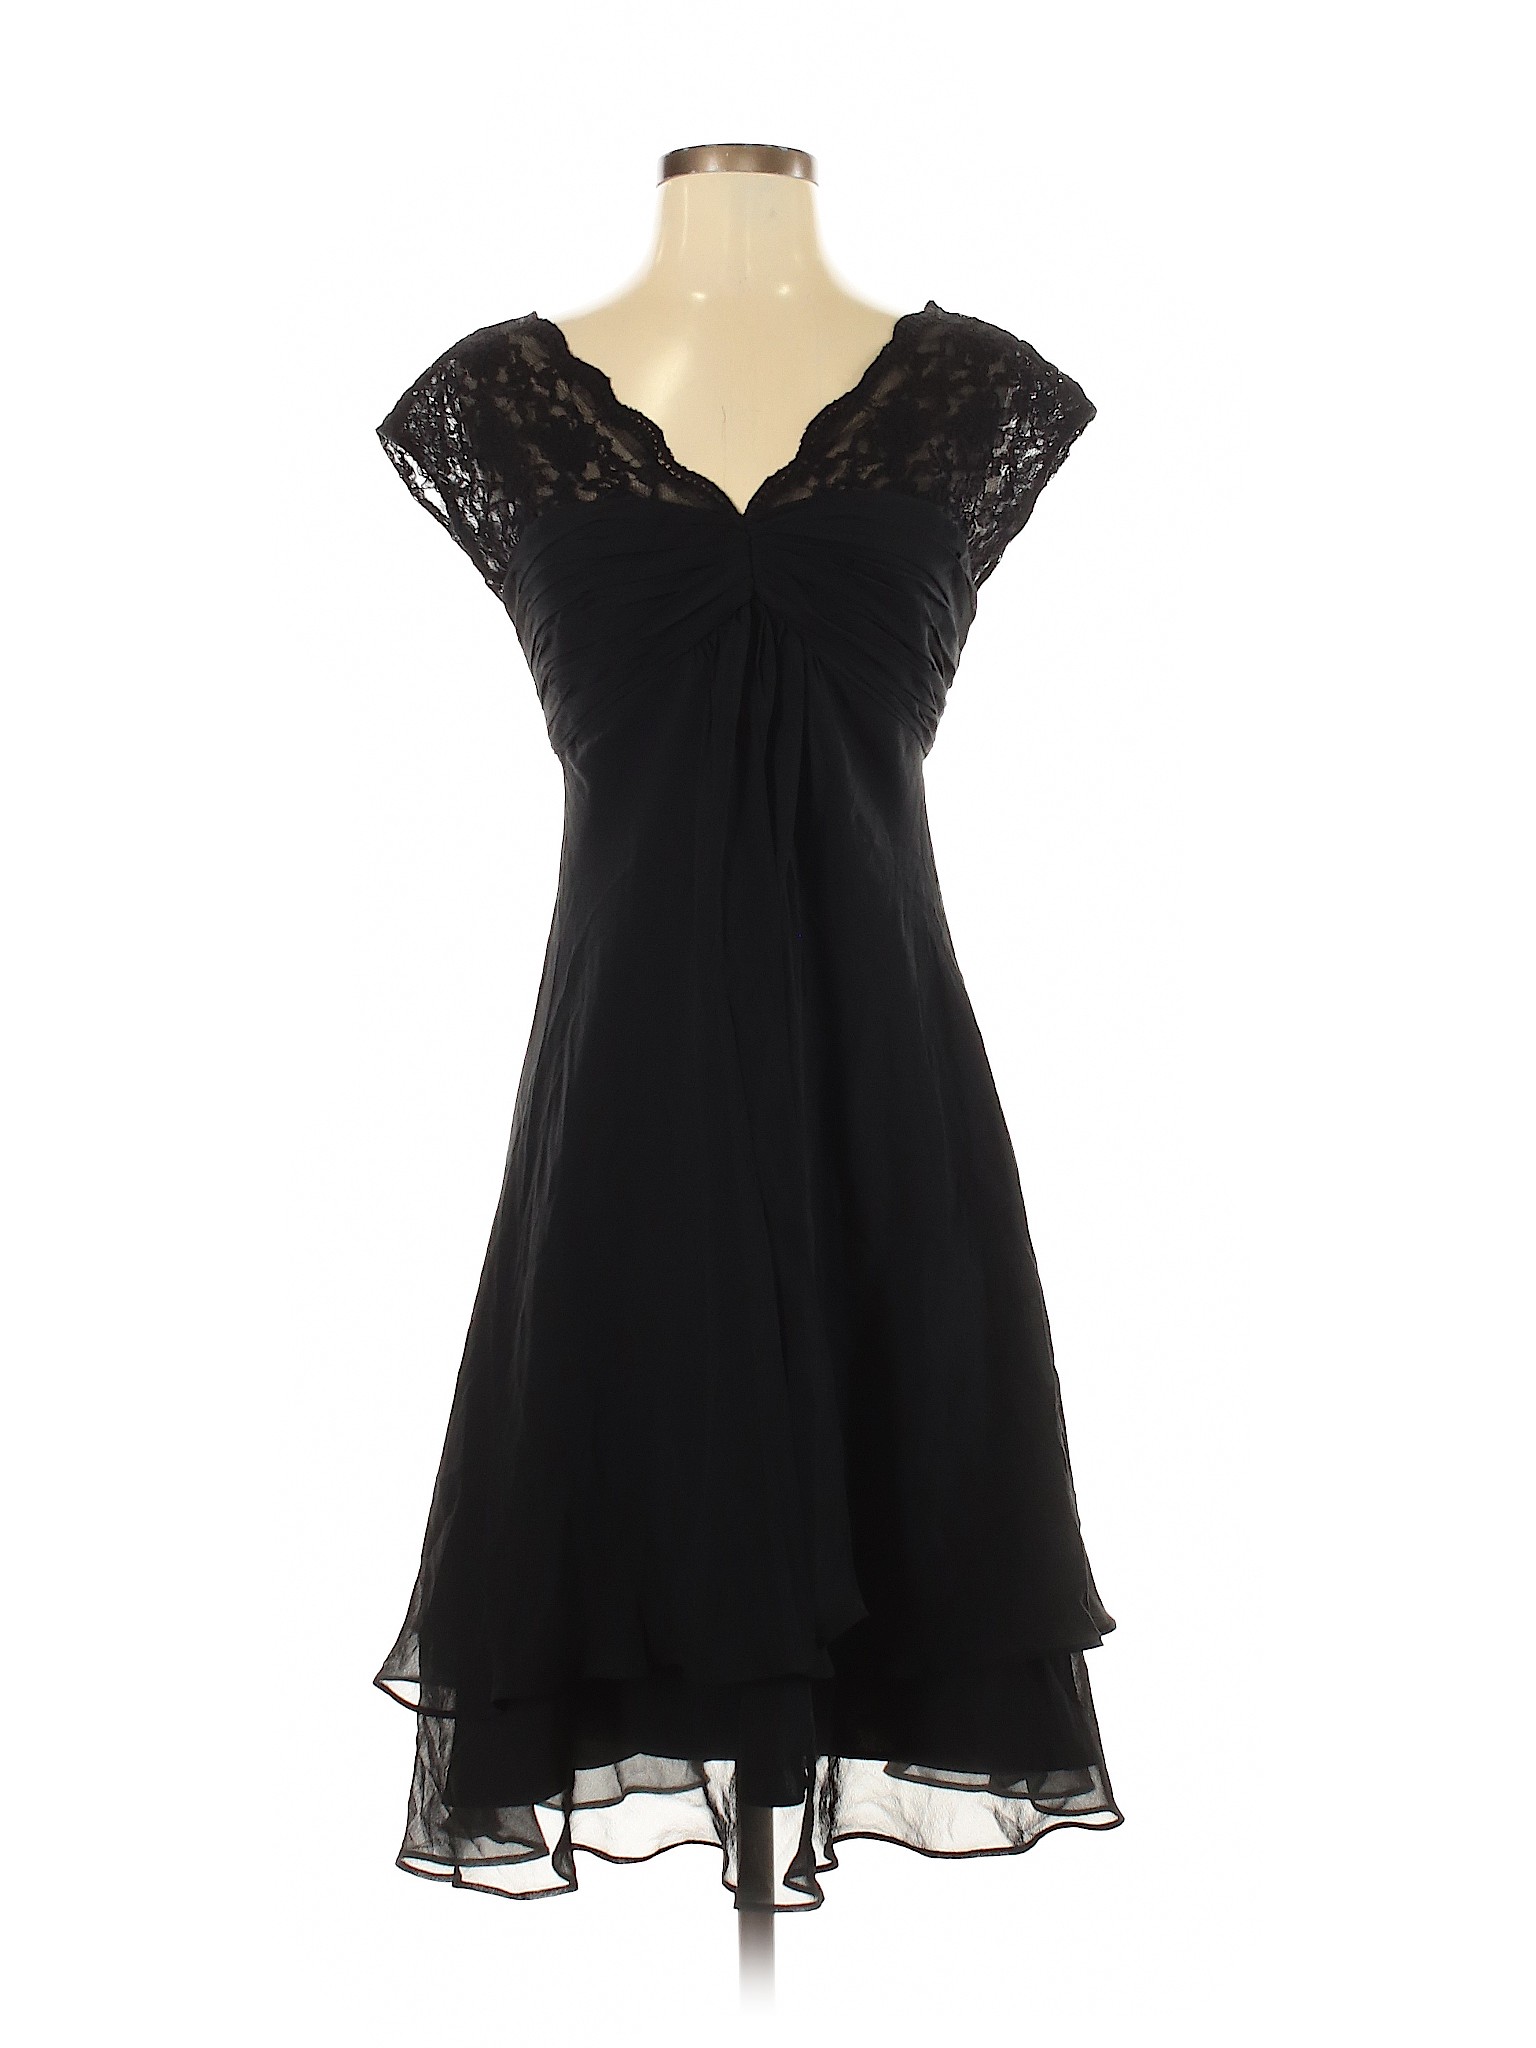 Donna Ricco Women Black Cocktail Dress 4 | eBay